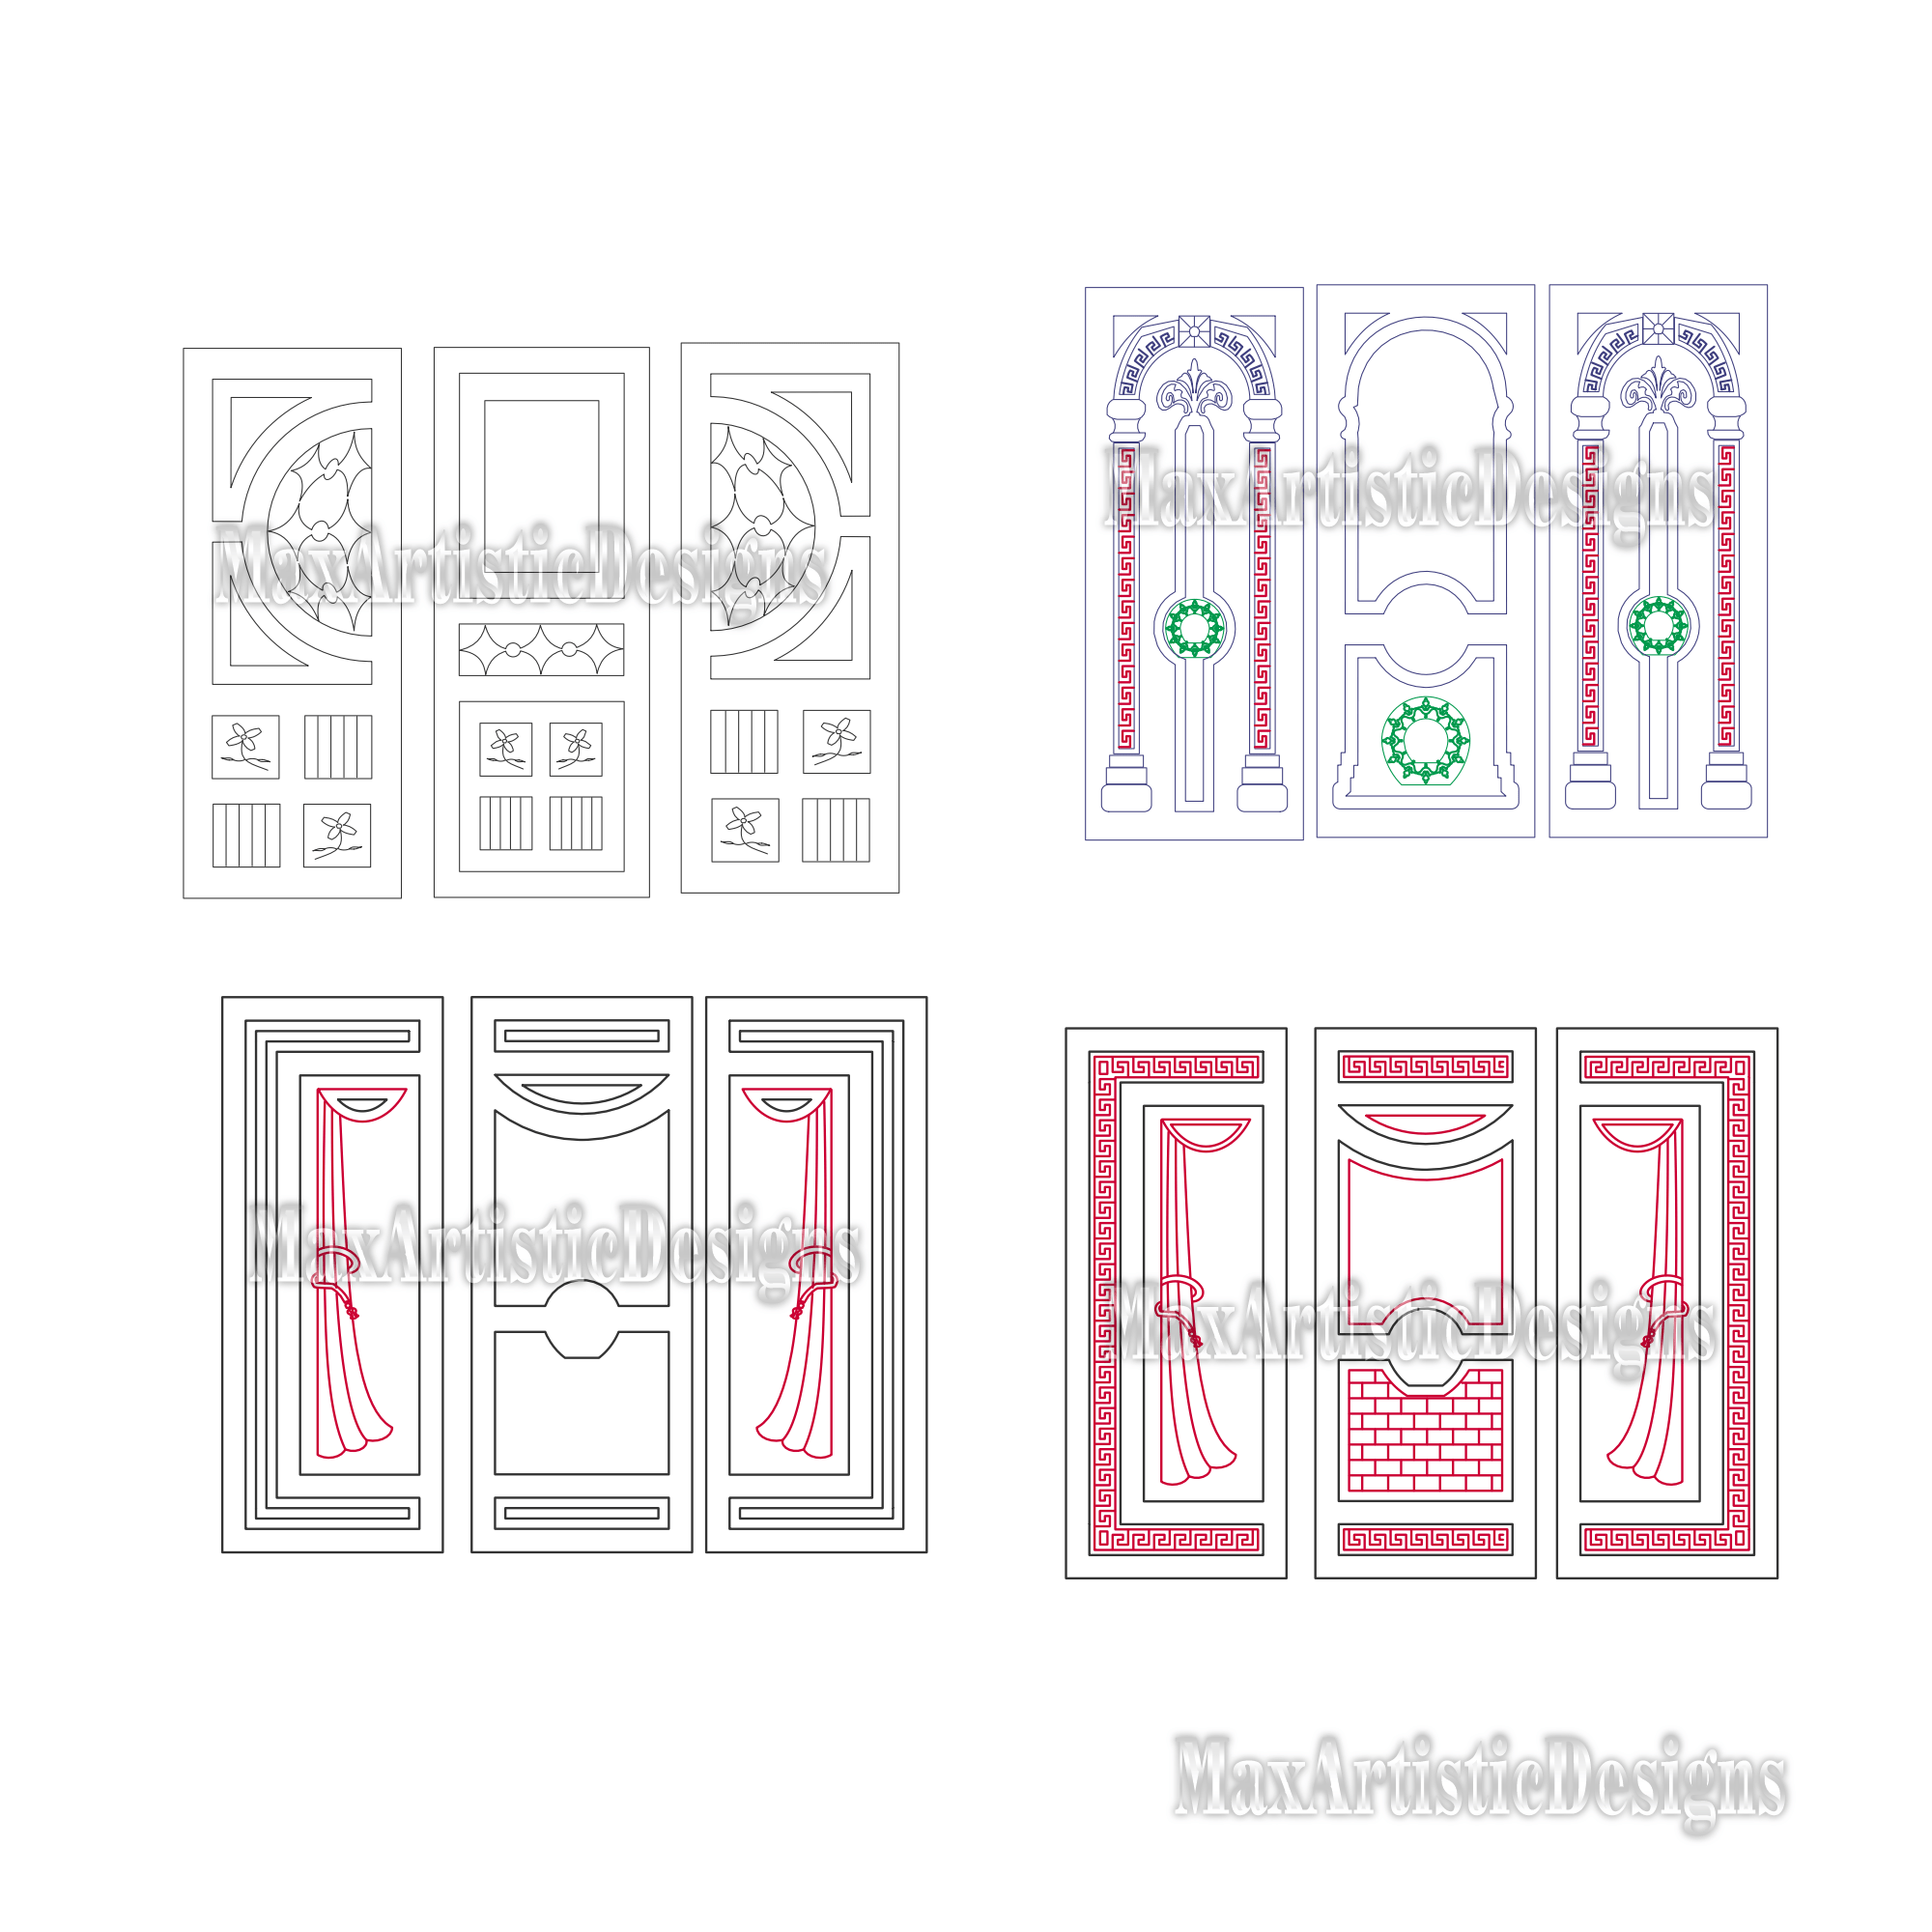 45+ "set di 3 porte" per pannelli cnc tagliati in legno impostati dxf cdr vettori cnc per download digitale di macchine da taglio laser